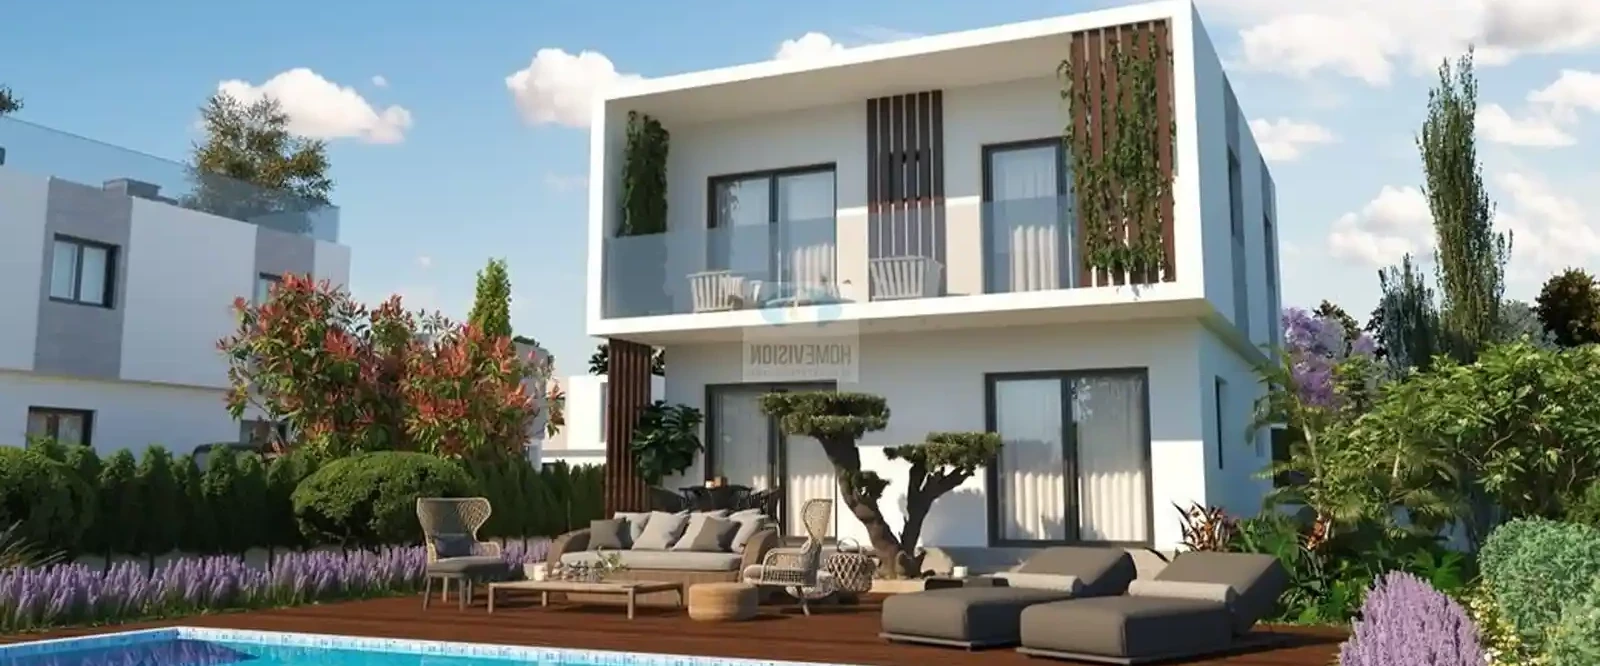 3-bedroom villa fоr sаle €420.000, image 1